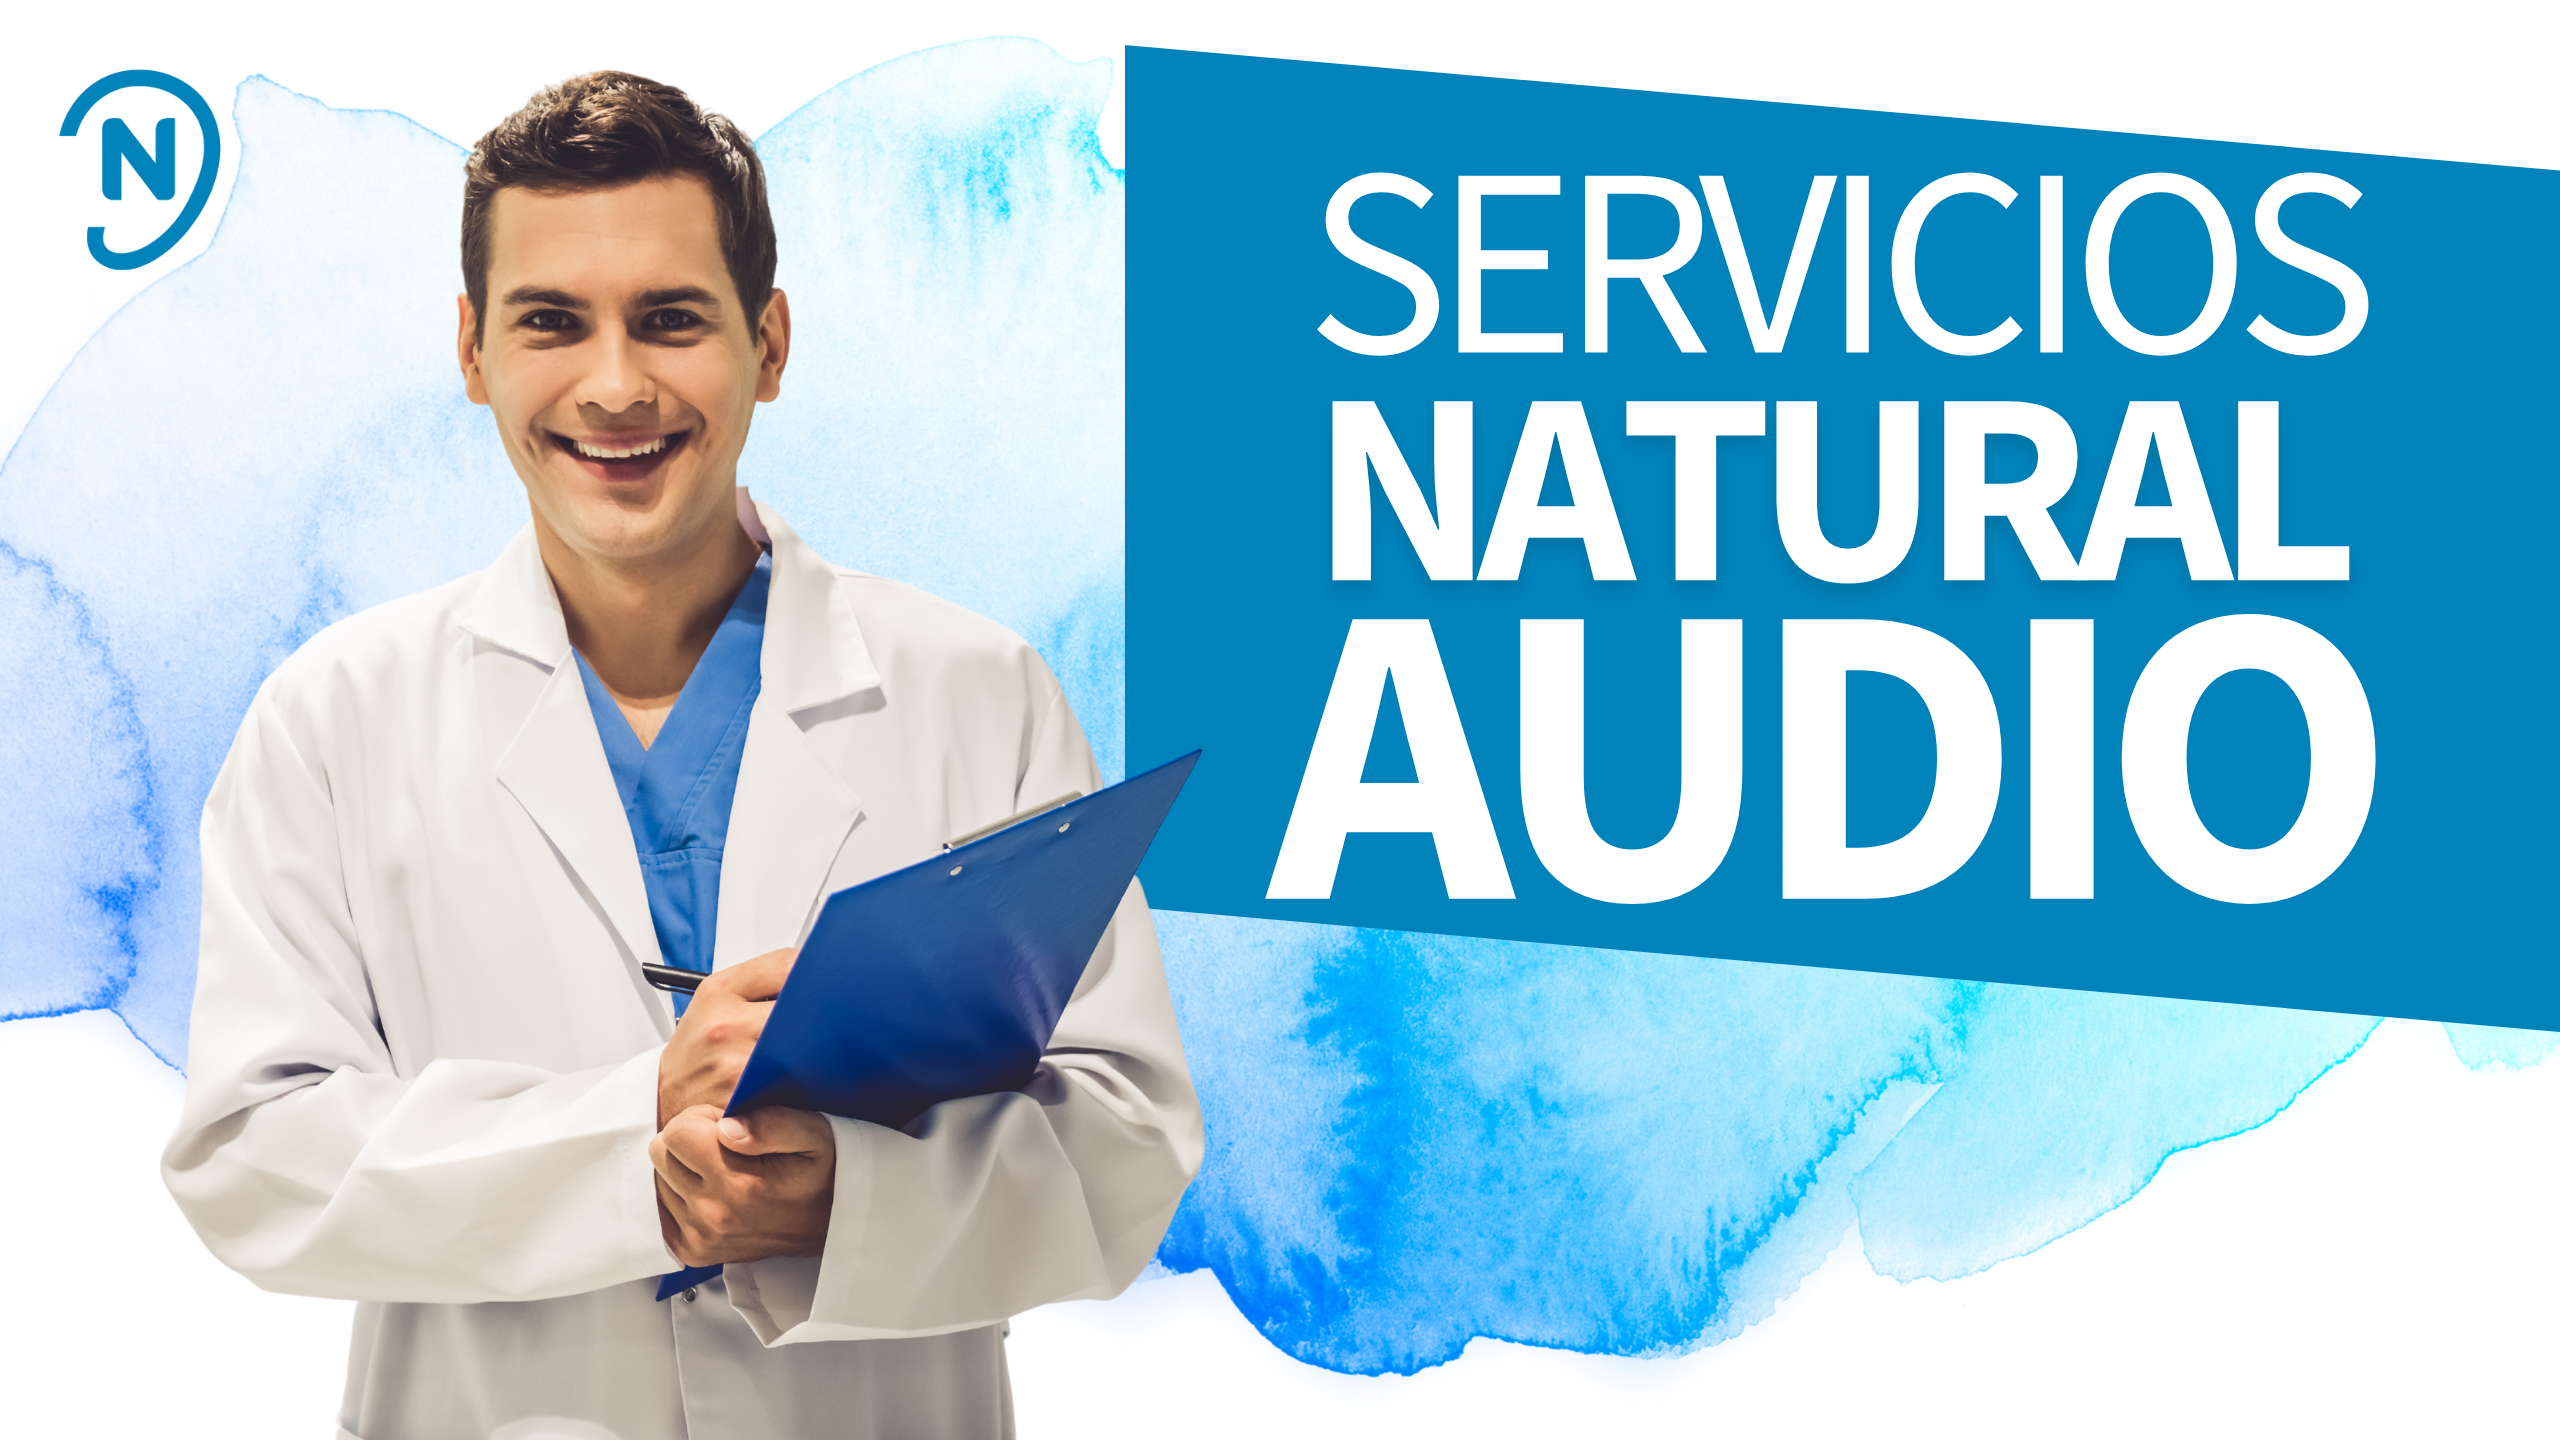 ¿Qué servicios se ofrecen en un Centro Auditivo Natural Audio?